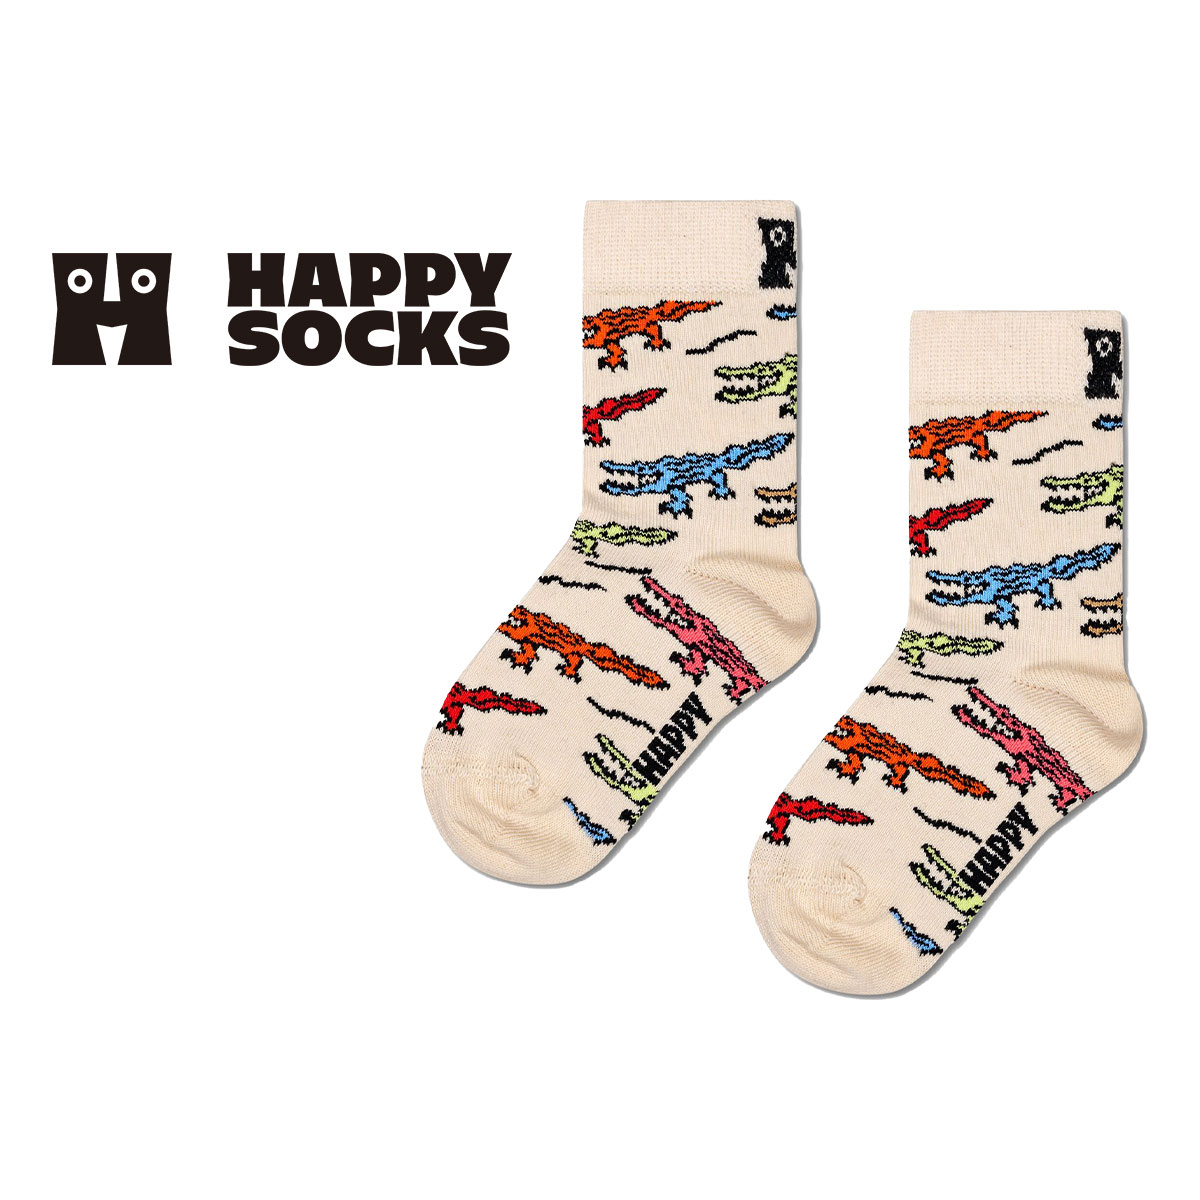 【24SS】Happy Socks ハッピーソックス Kids Crocodile ( クロコダイル ) ワニ 子供 クルー丈 綿混 ソックス KIDS ジュニア キッズ 12240015